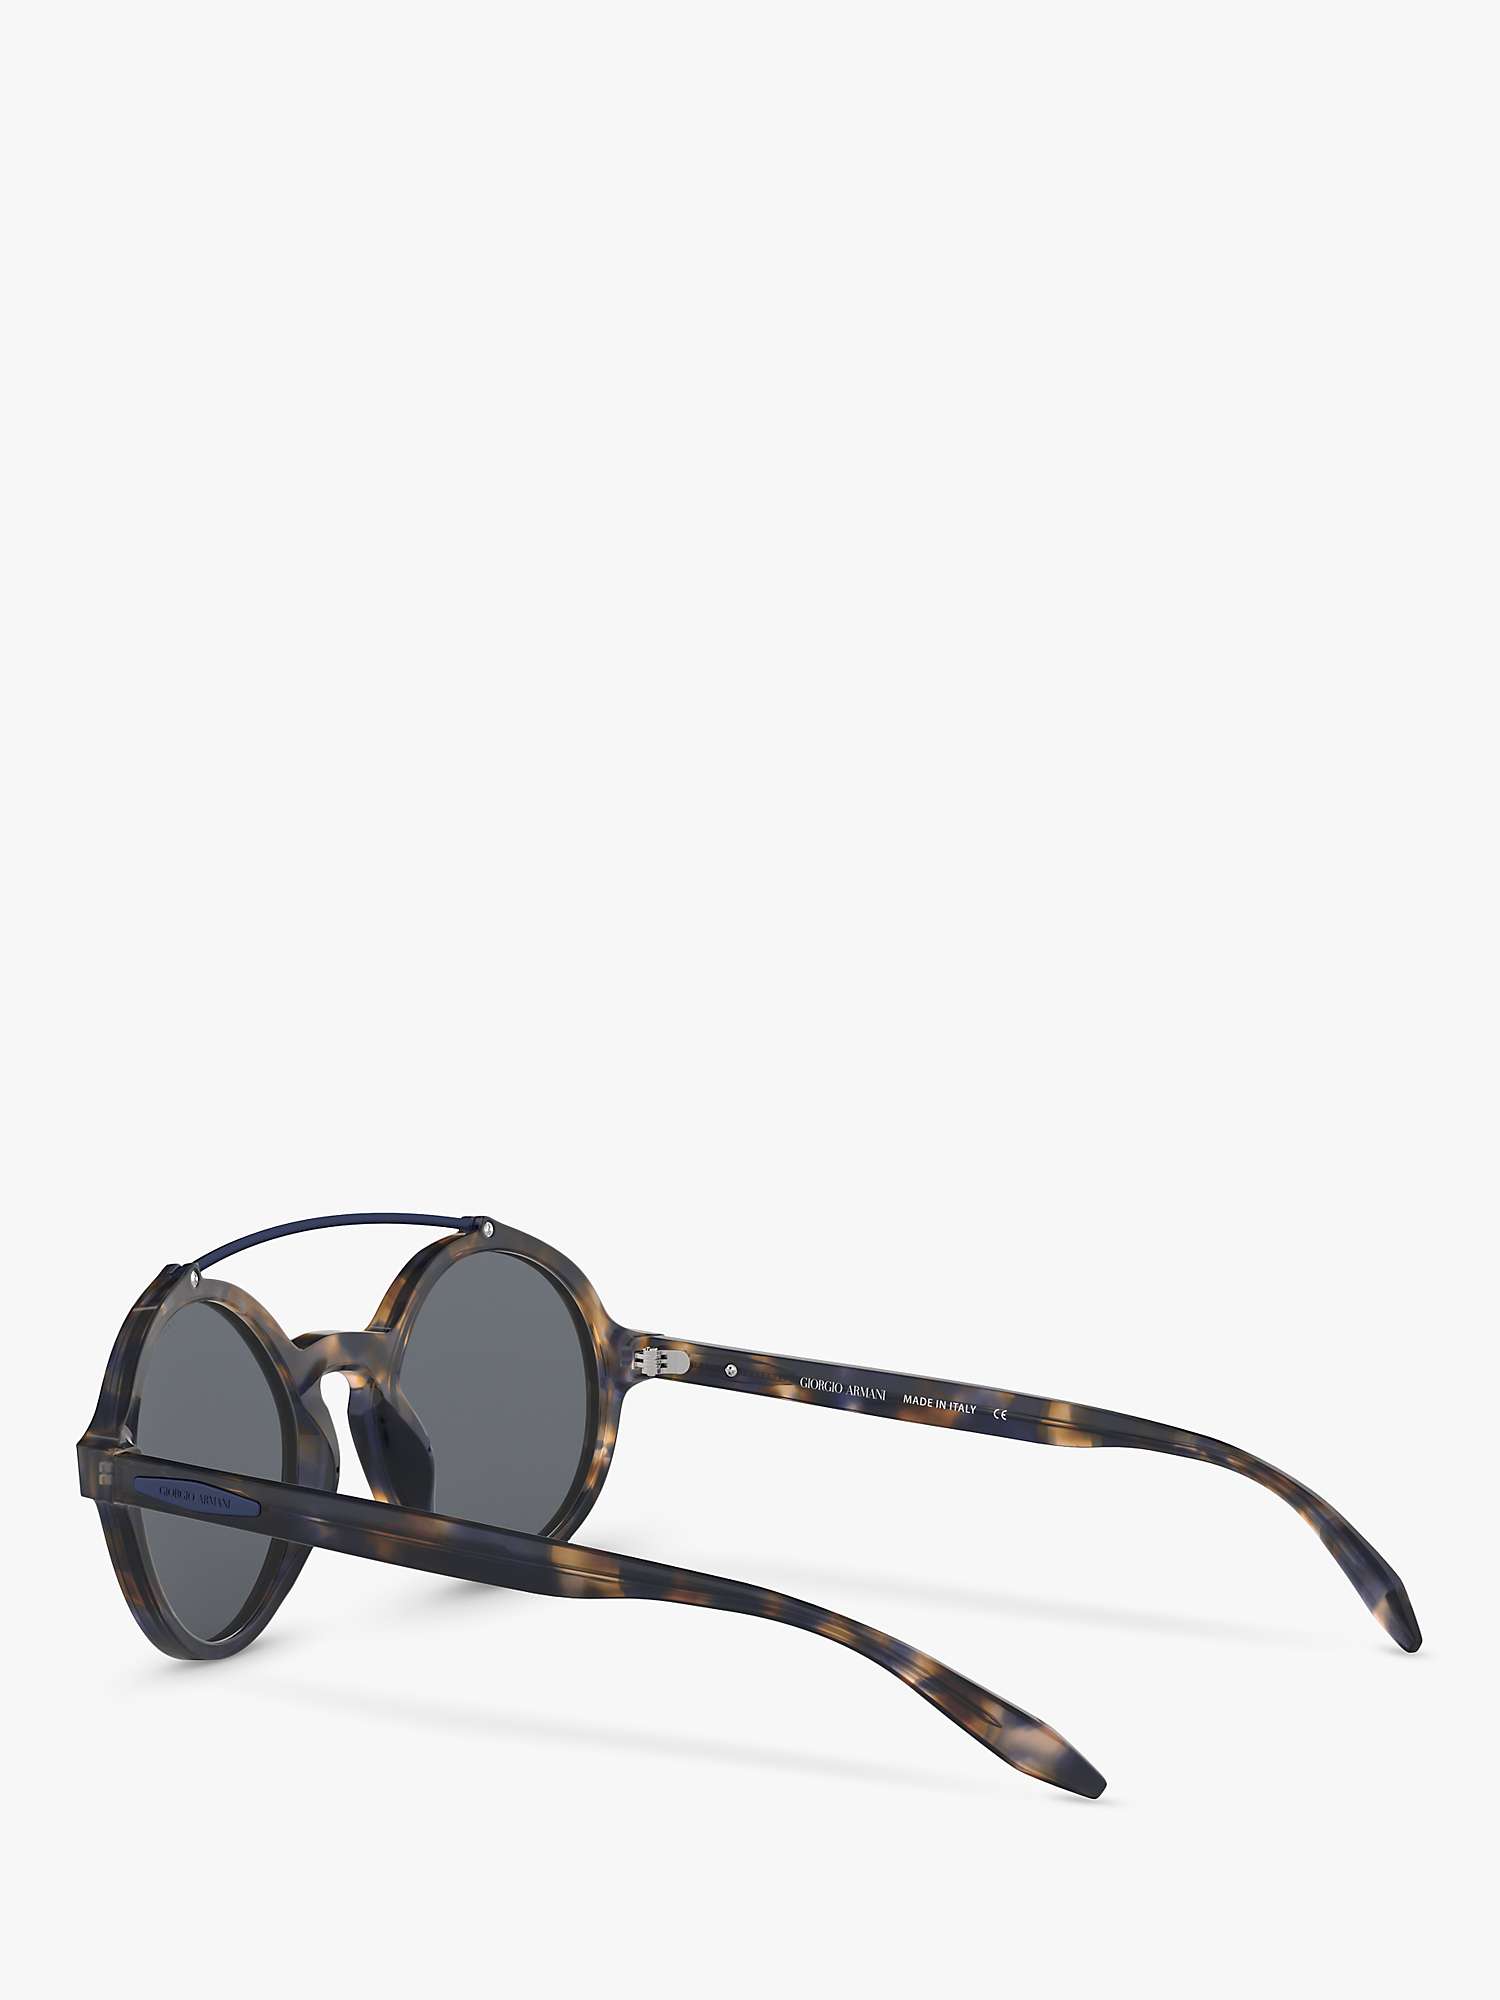 Buy Giorgio Armani AR8114 Men's Round Sunglasses, Navy Havana/Grey Online at johnlewis.com